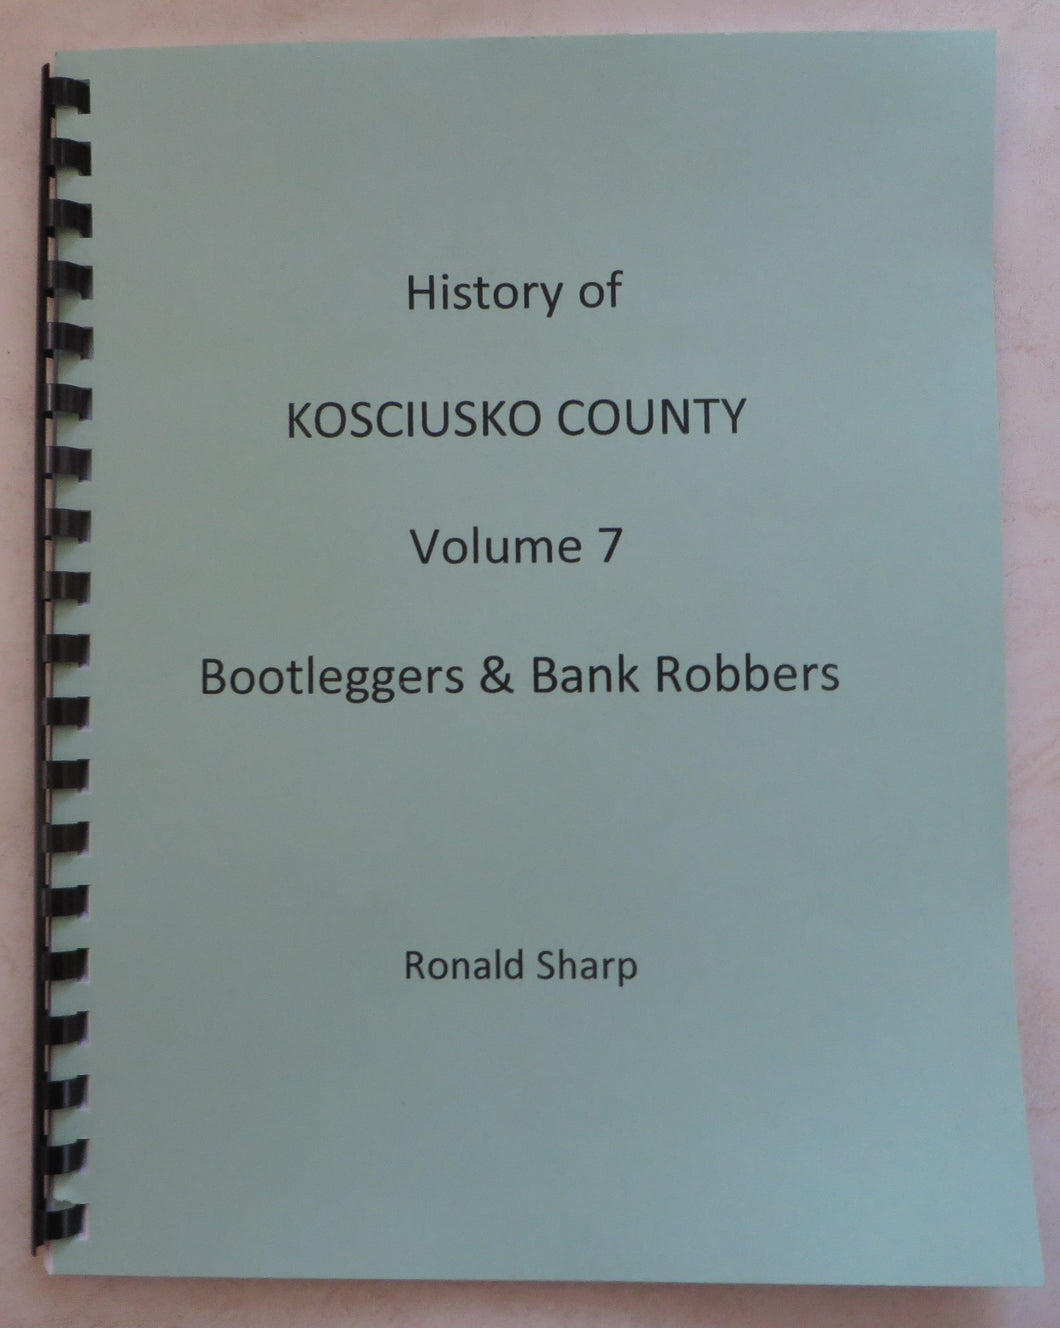 History of Kosciusko County, Volume 7, Bootleggers & Bank Robbers